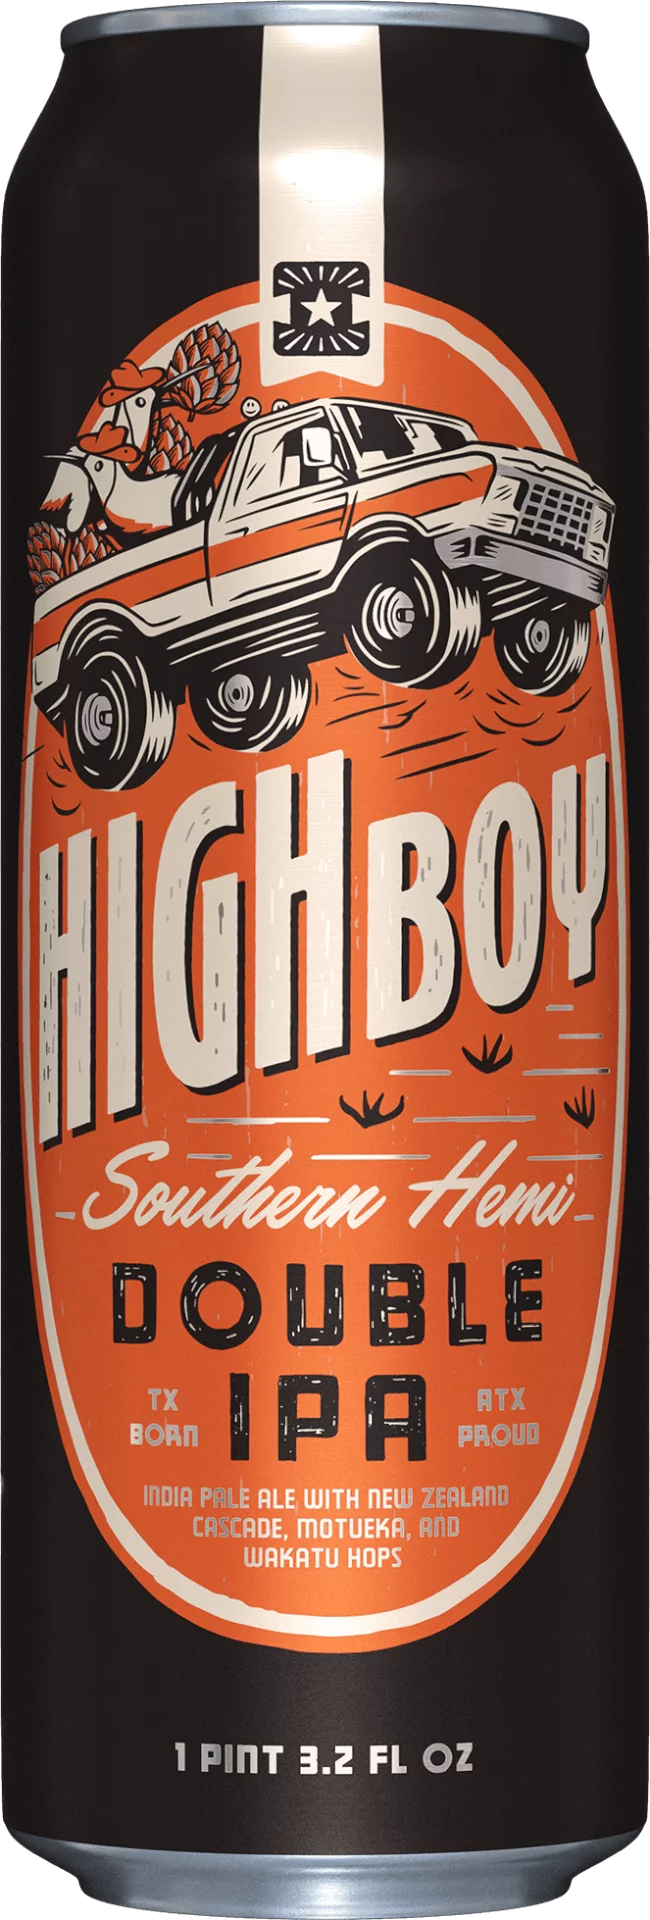 Highboy: Southern Hemi